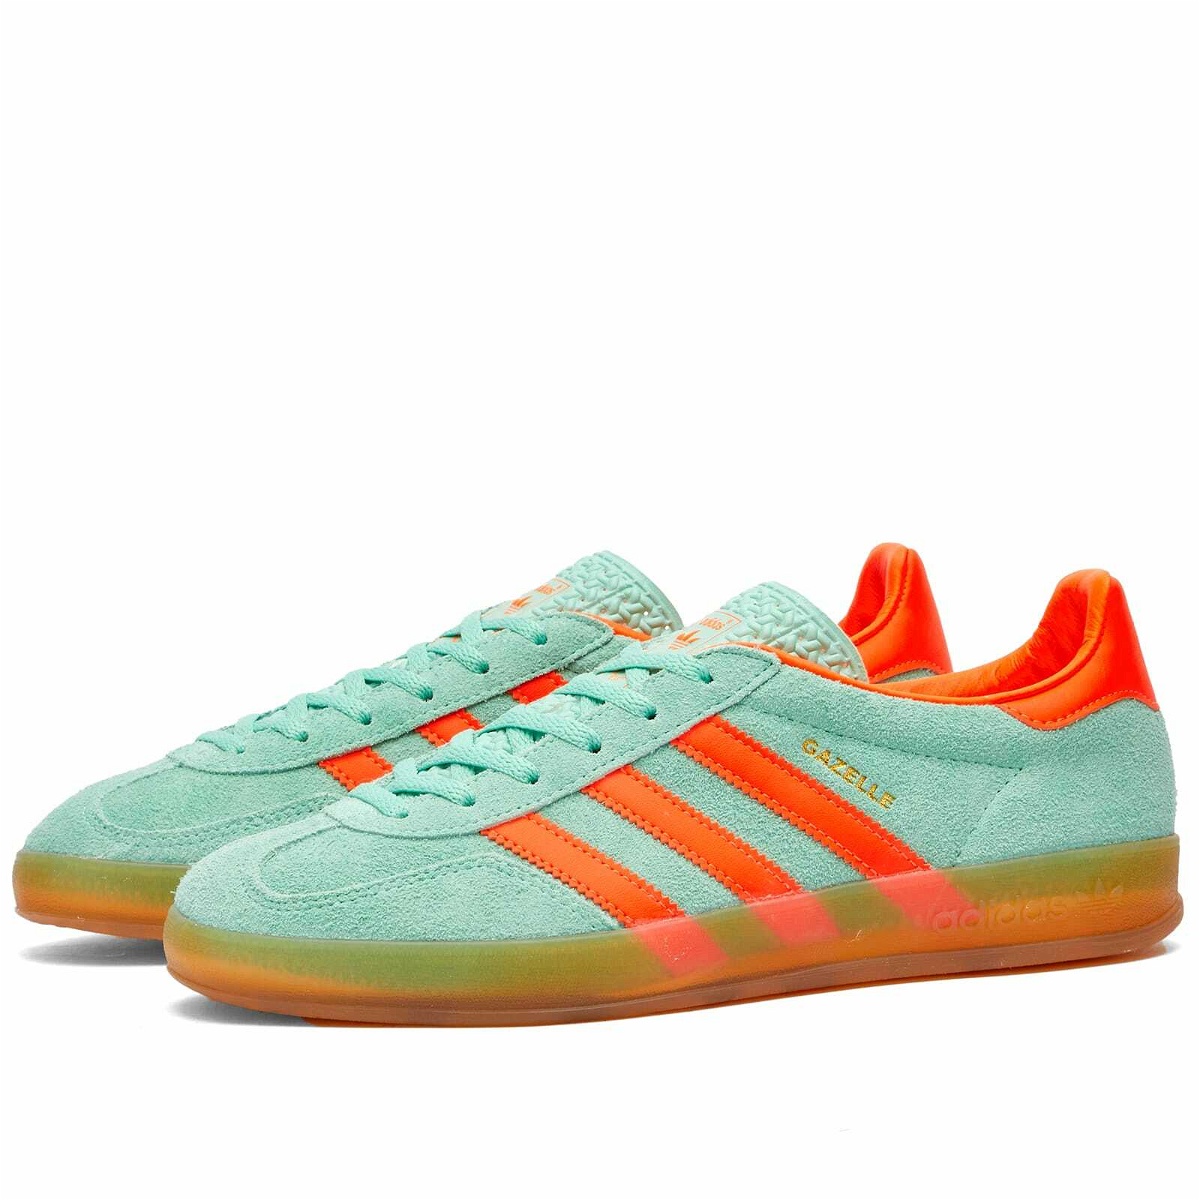 Adidas Gazelle Indoor W Pulse in adidas Sneakers Mint/Orange